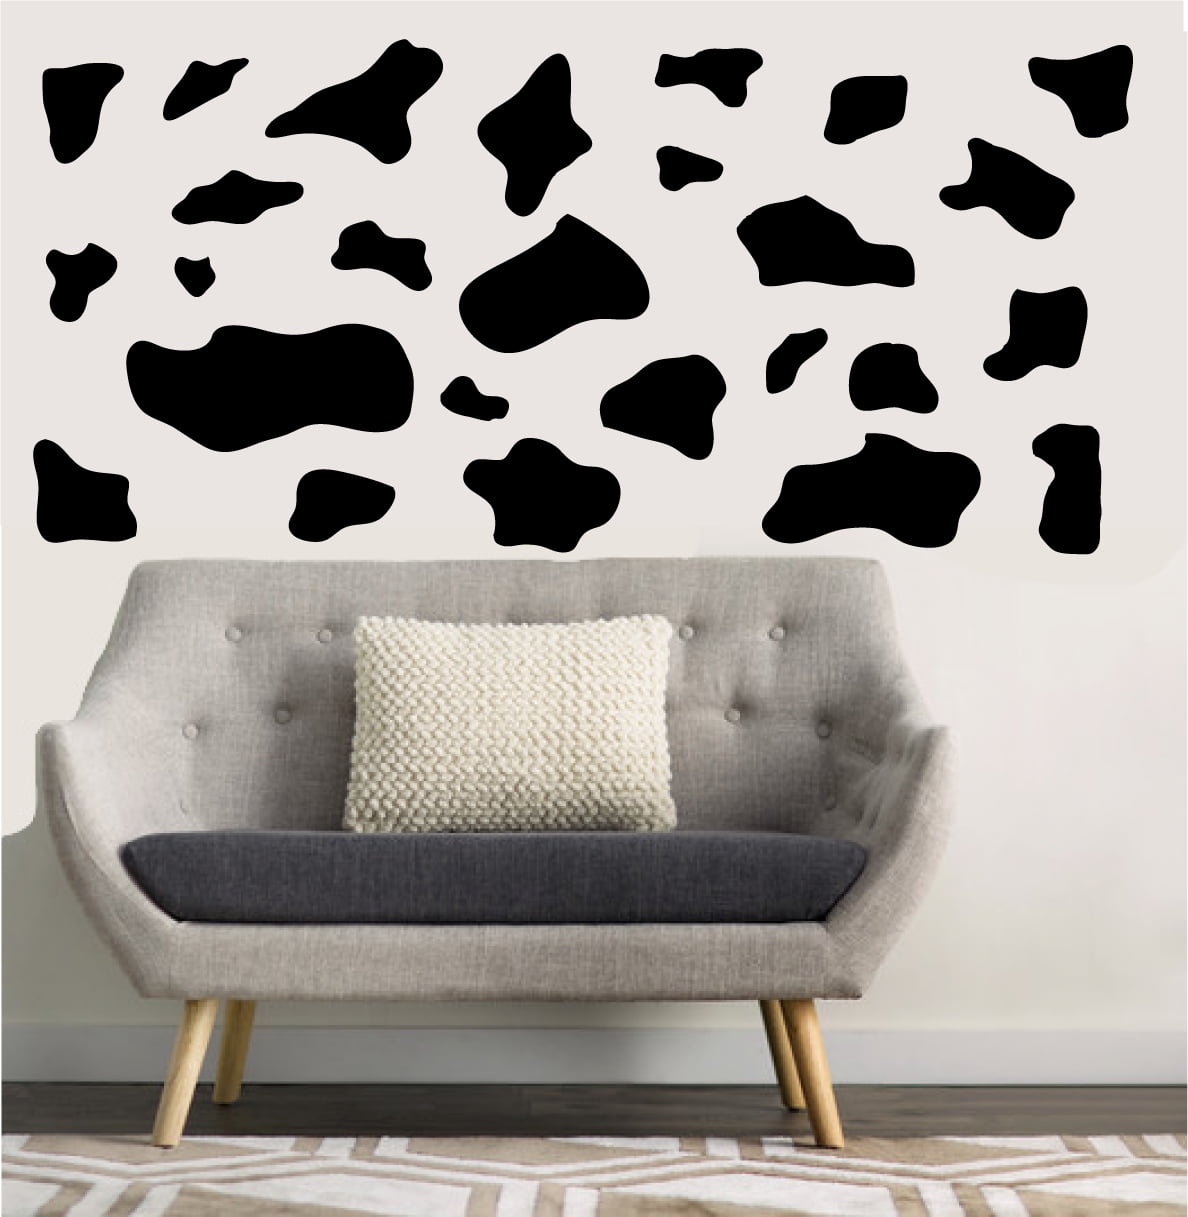 Black Cow Print Pattern Wall Stickers Decals Presto Chango Decor Animal  Print Peel and Stick Western Cowboy Wall Décor 